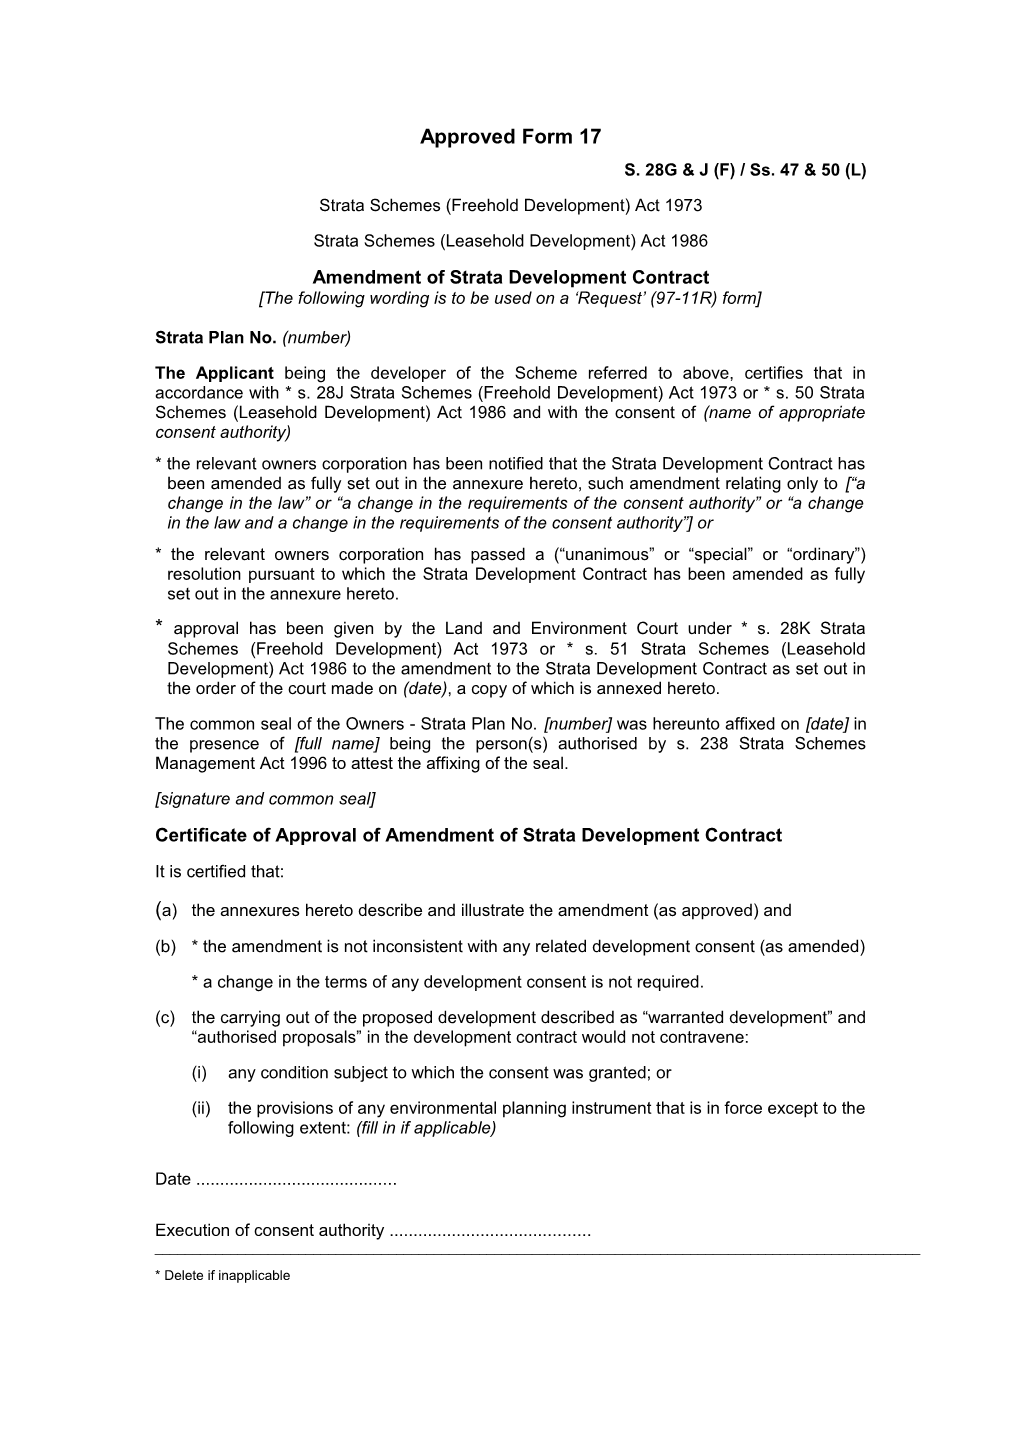 Strata Schemes (Freehold Development) Act 1973